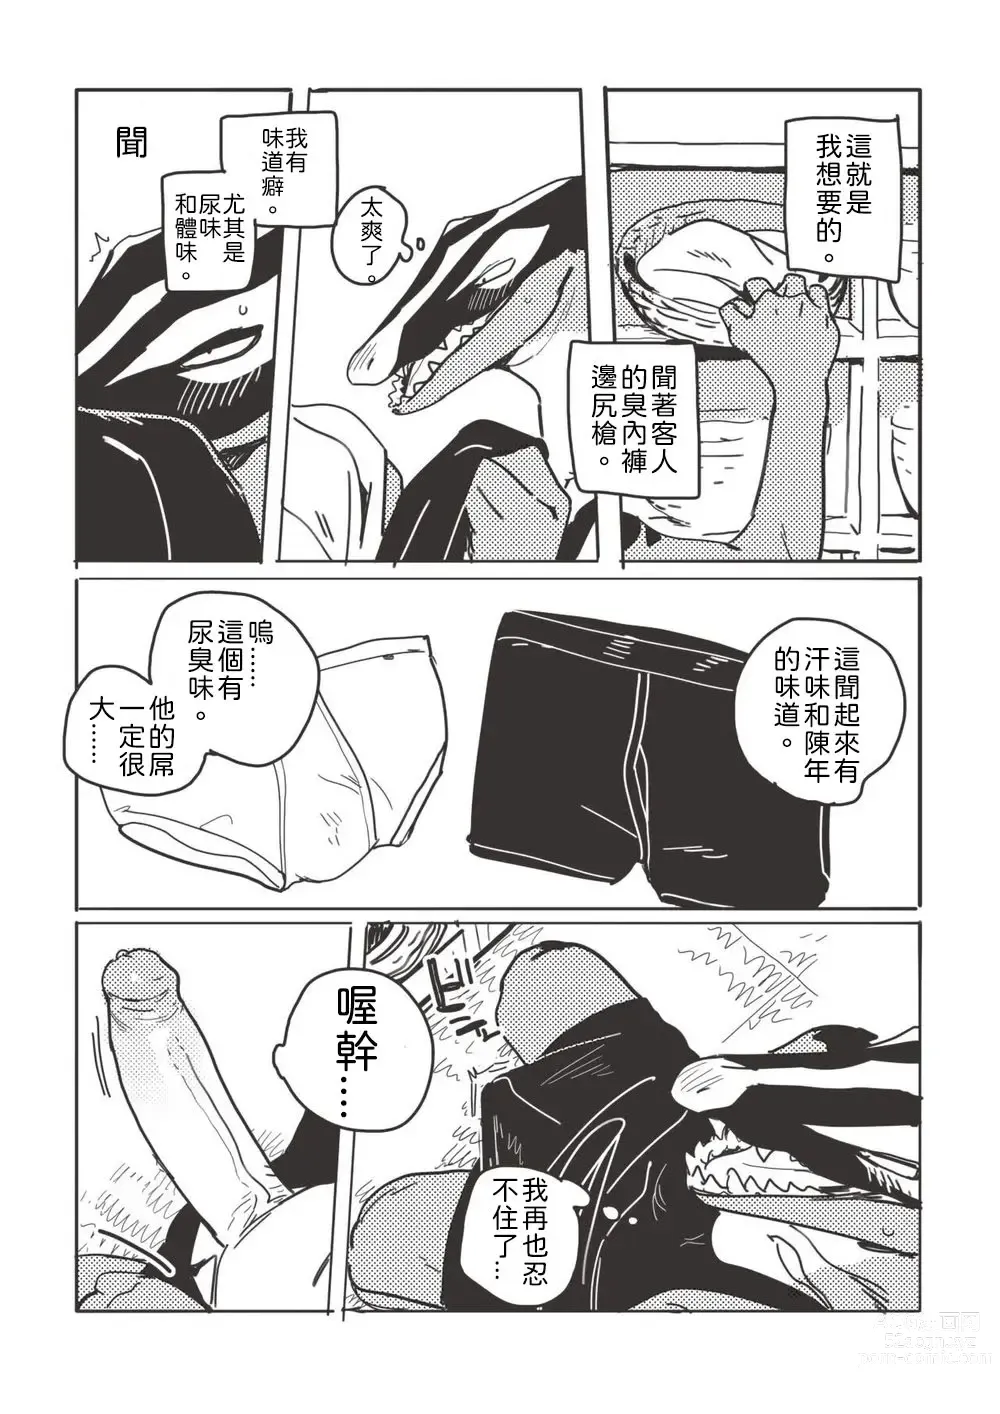 Page 4 of doujinshi Hot spring Zaurus 溫泉恐龍